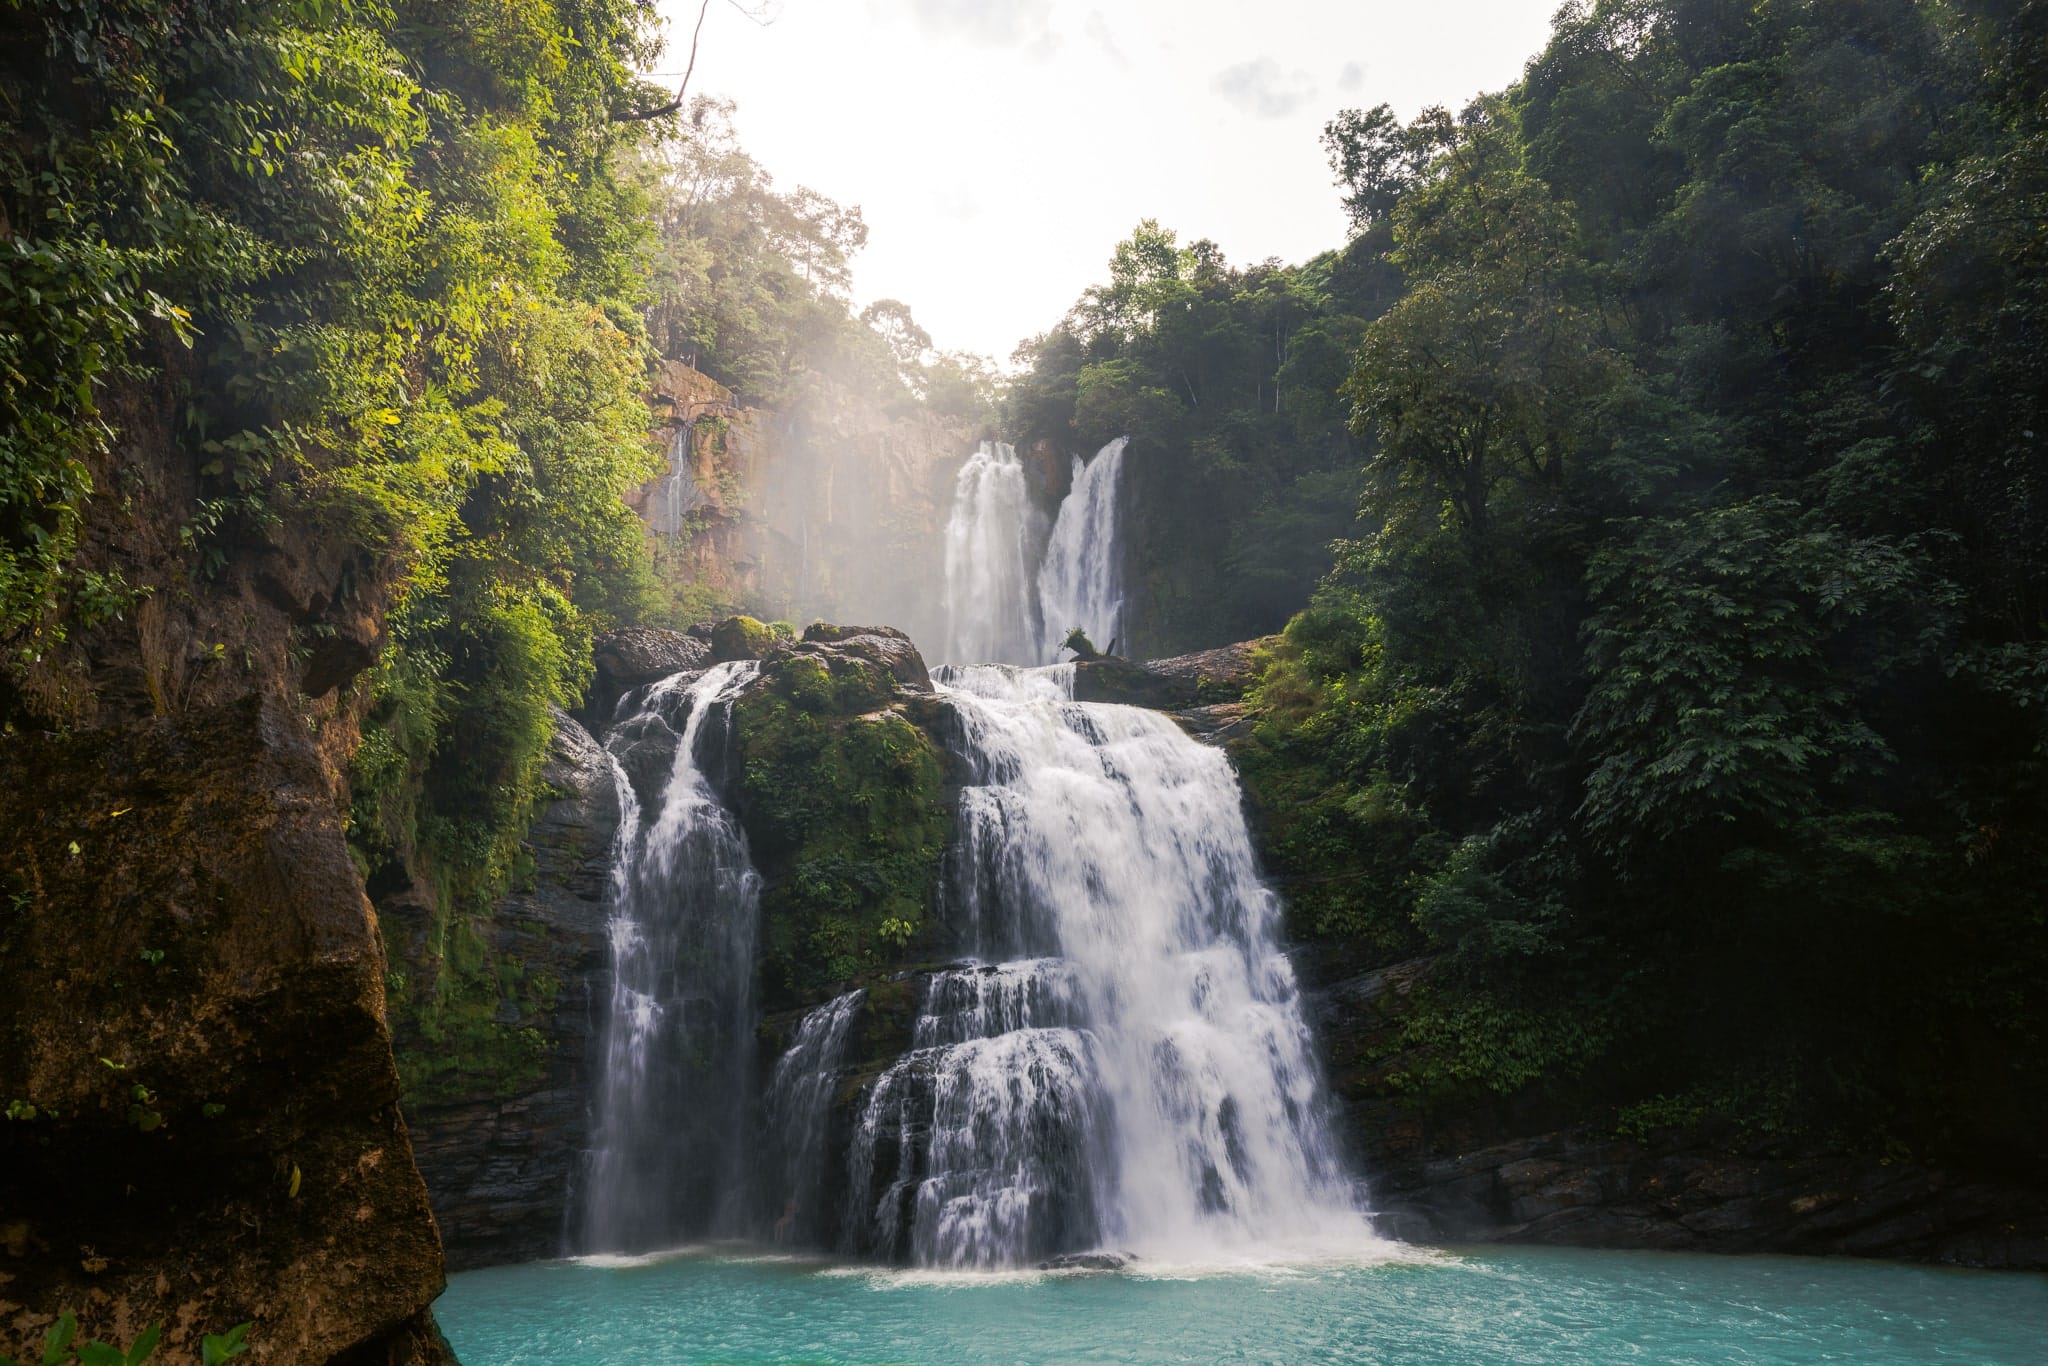 Nauyaca Waterfalls is among the most beautiful waterfalls in Costa Rica